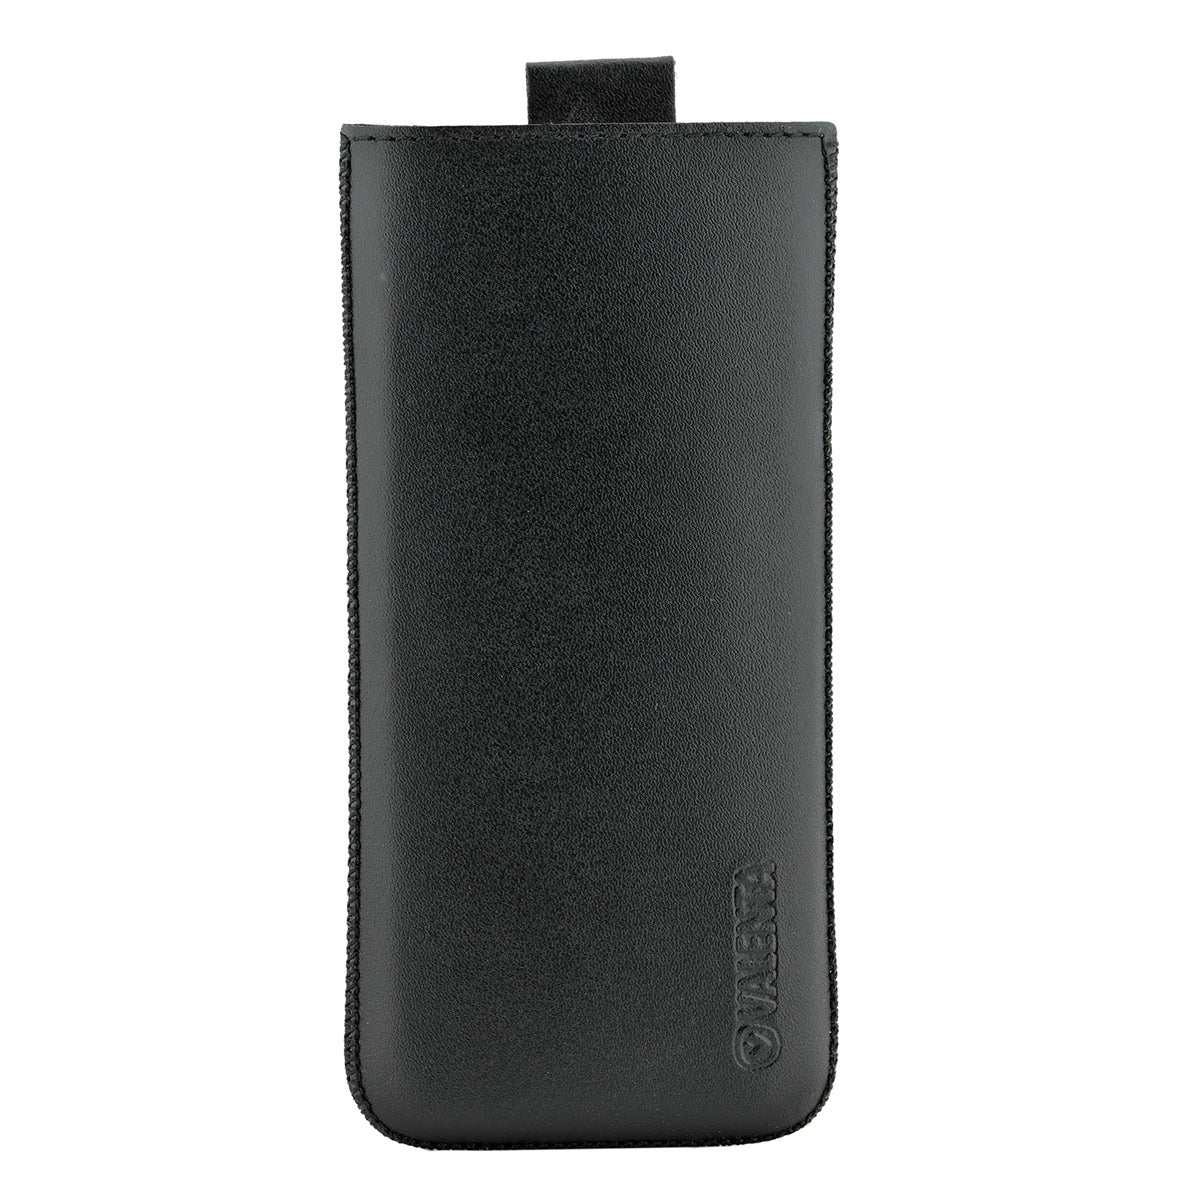  Einschubhülle Pocket Classic Schwarz 42 - zB Galaxy S9 - H148 x B72 x D8